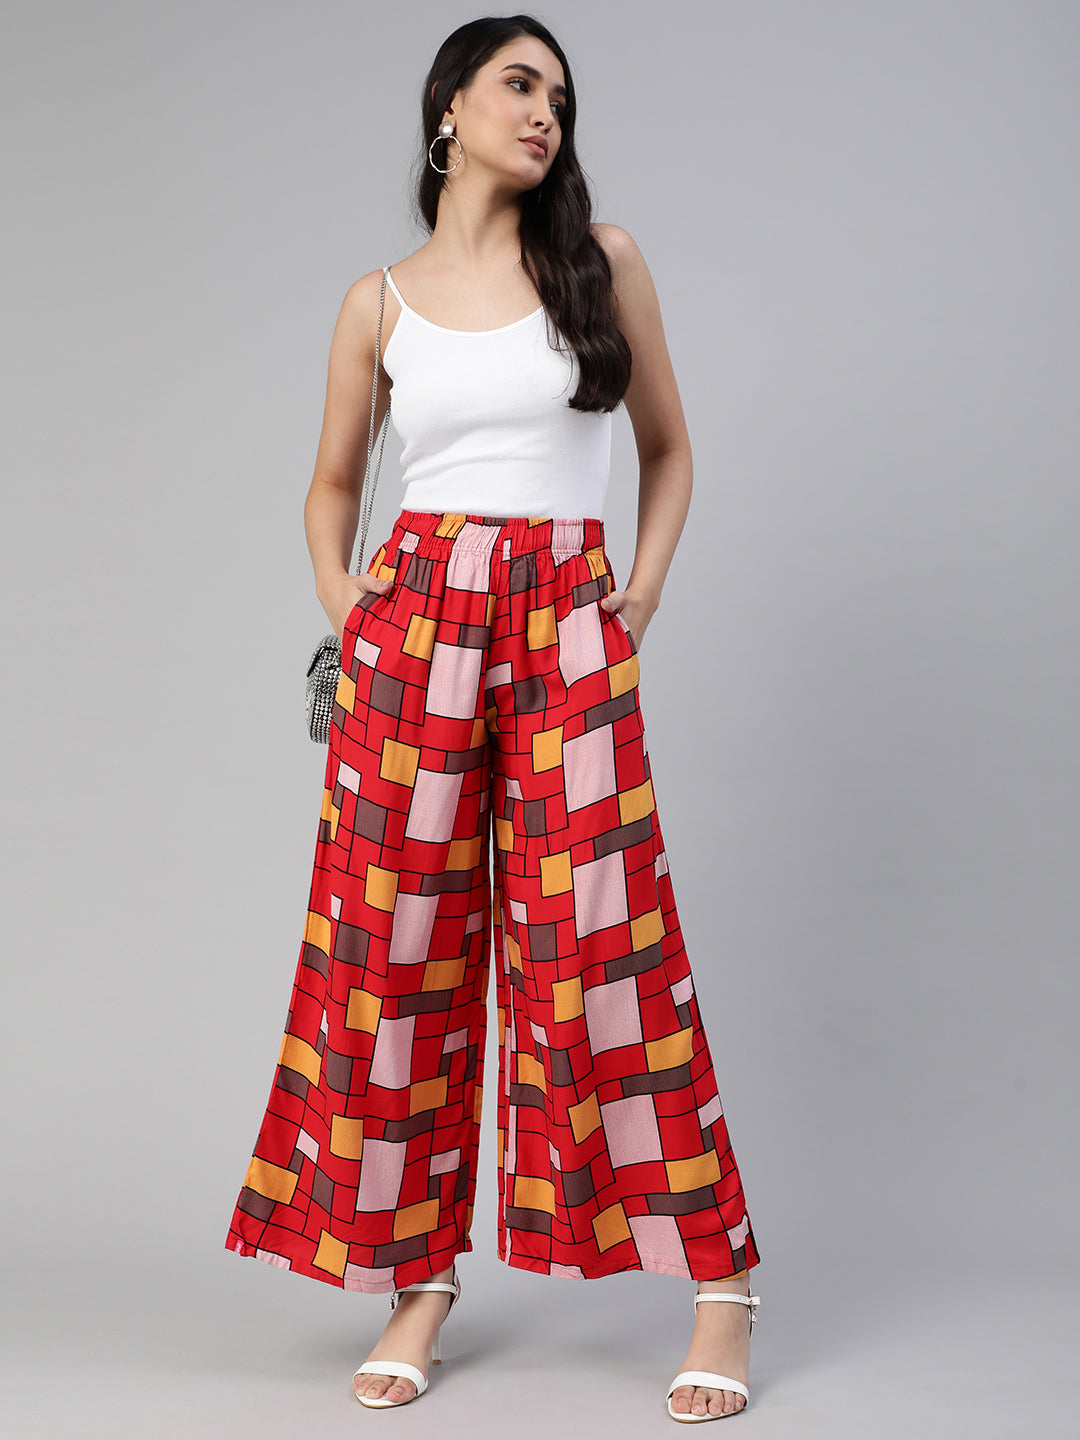 Lux Lyra, Comfort Lady Pants| Premium 3 pc kurti set, Palazzo, Night wear  #wholesalemarket #trending - YouTube